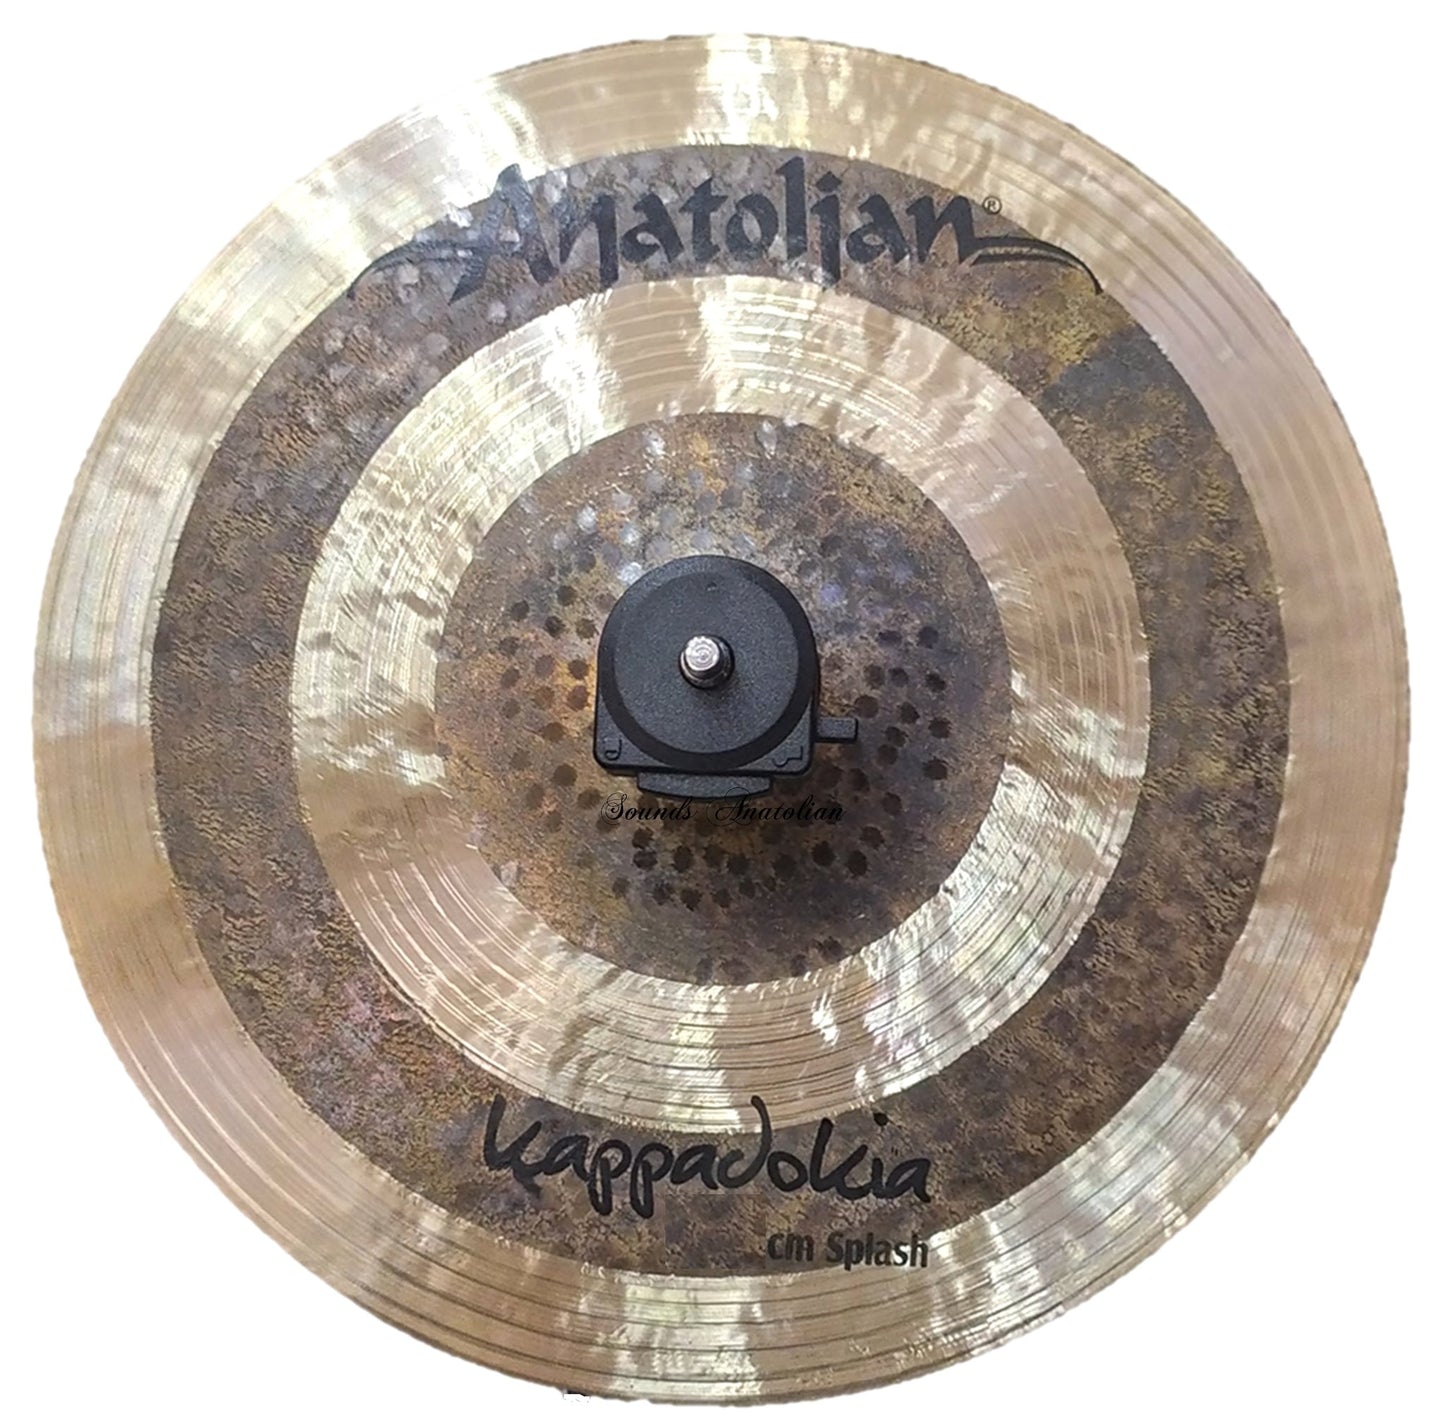 Anatolian Cymbals Kappadokia Series